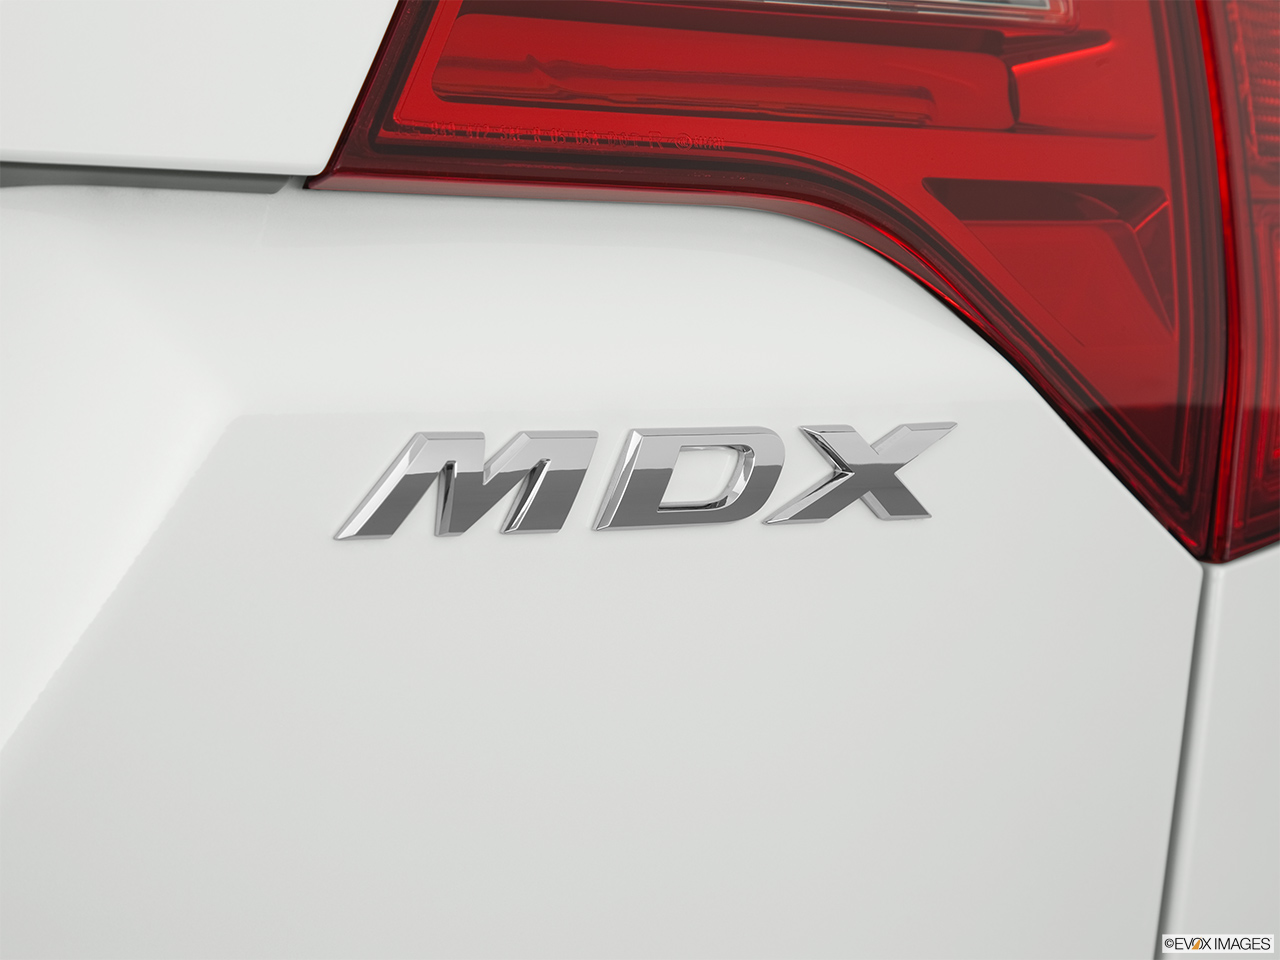 2012 Acura MDX MDX Rear model badge/emblem 